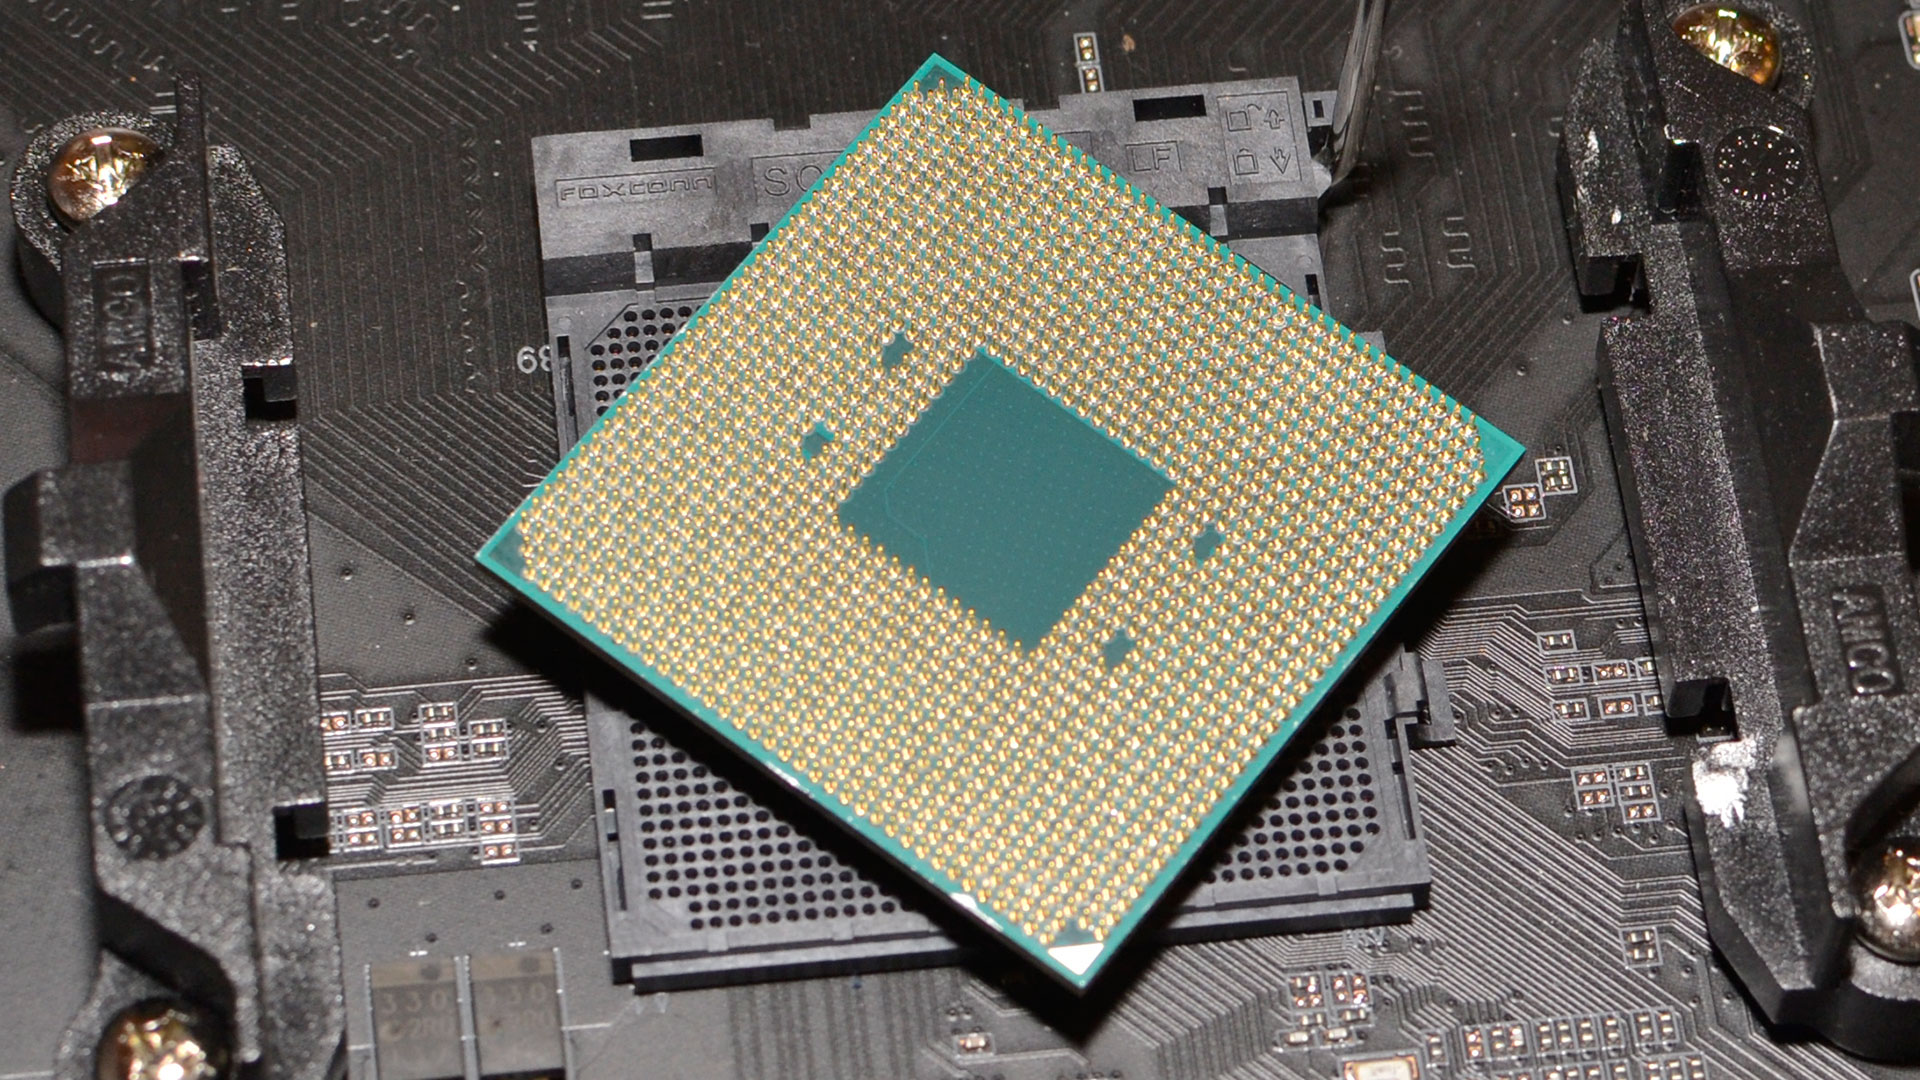 AMD AM5 socket specs leak including info on monster 170W chip